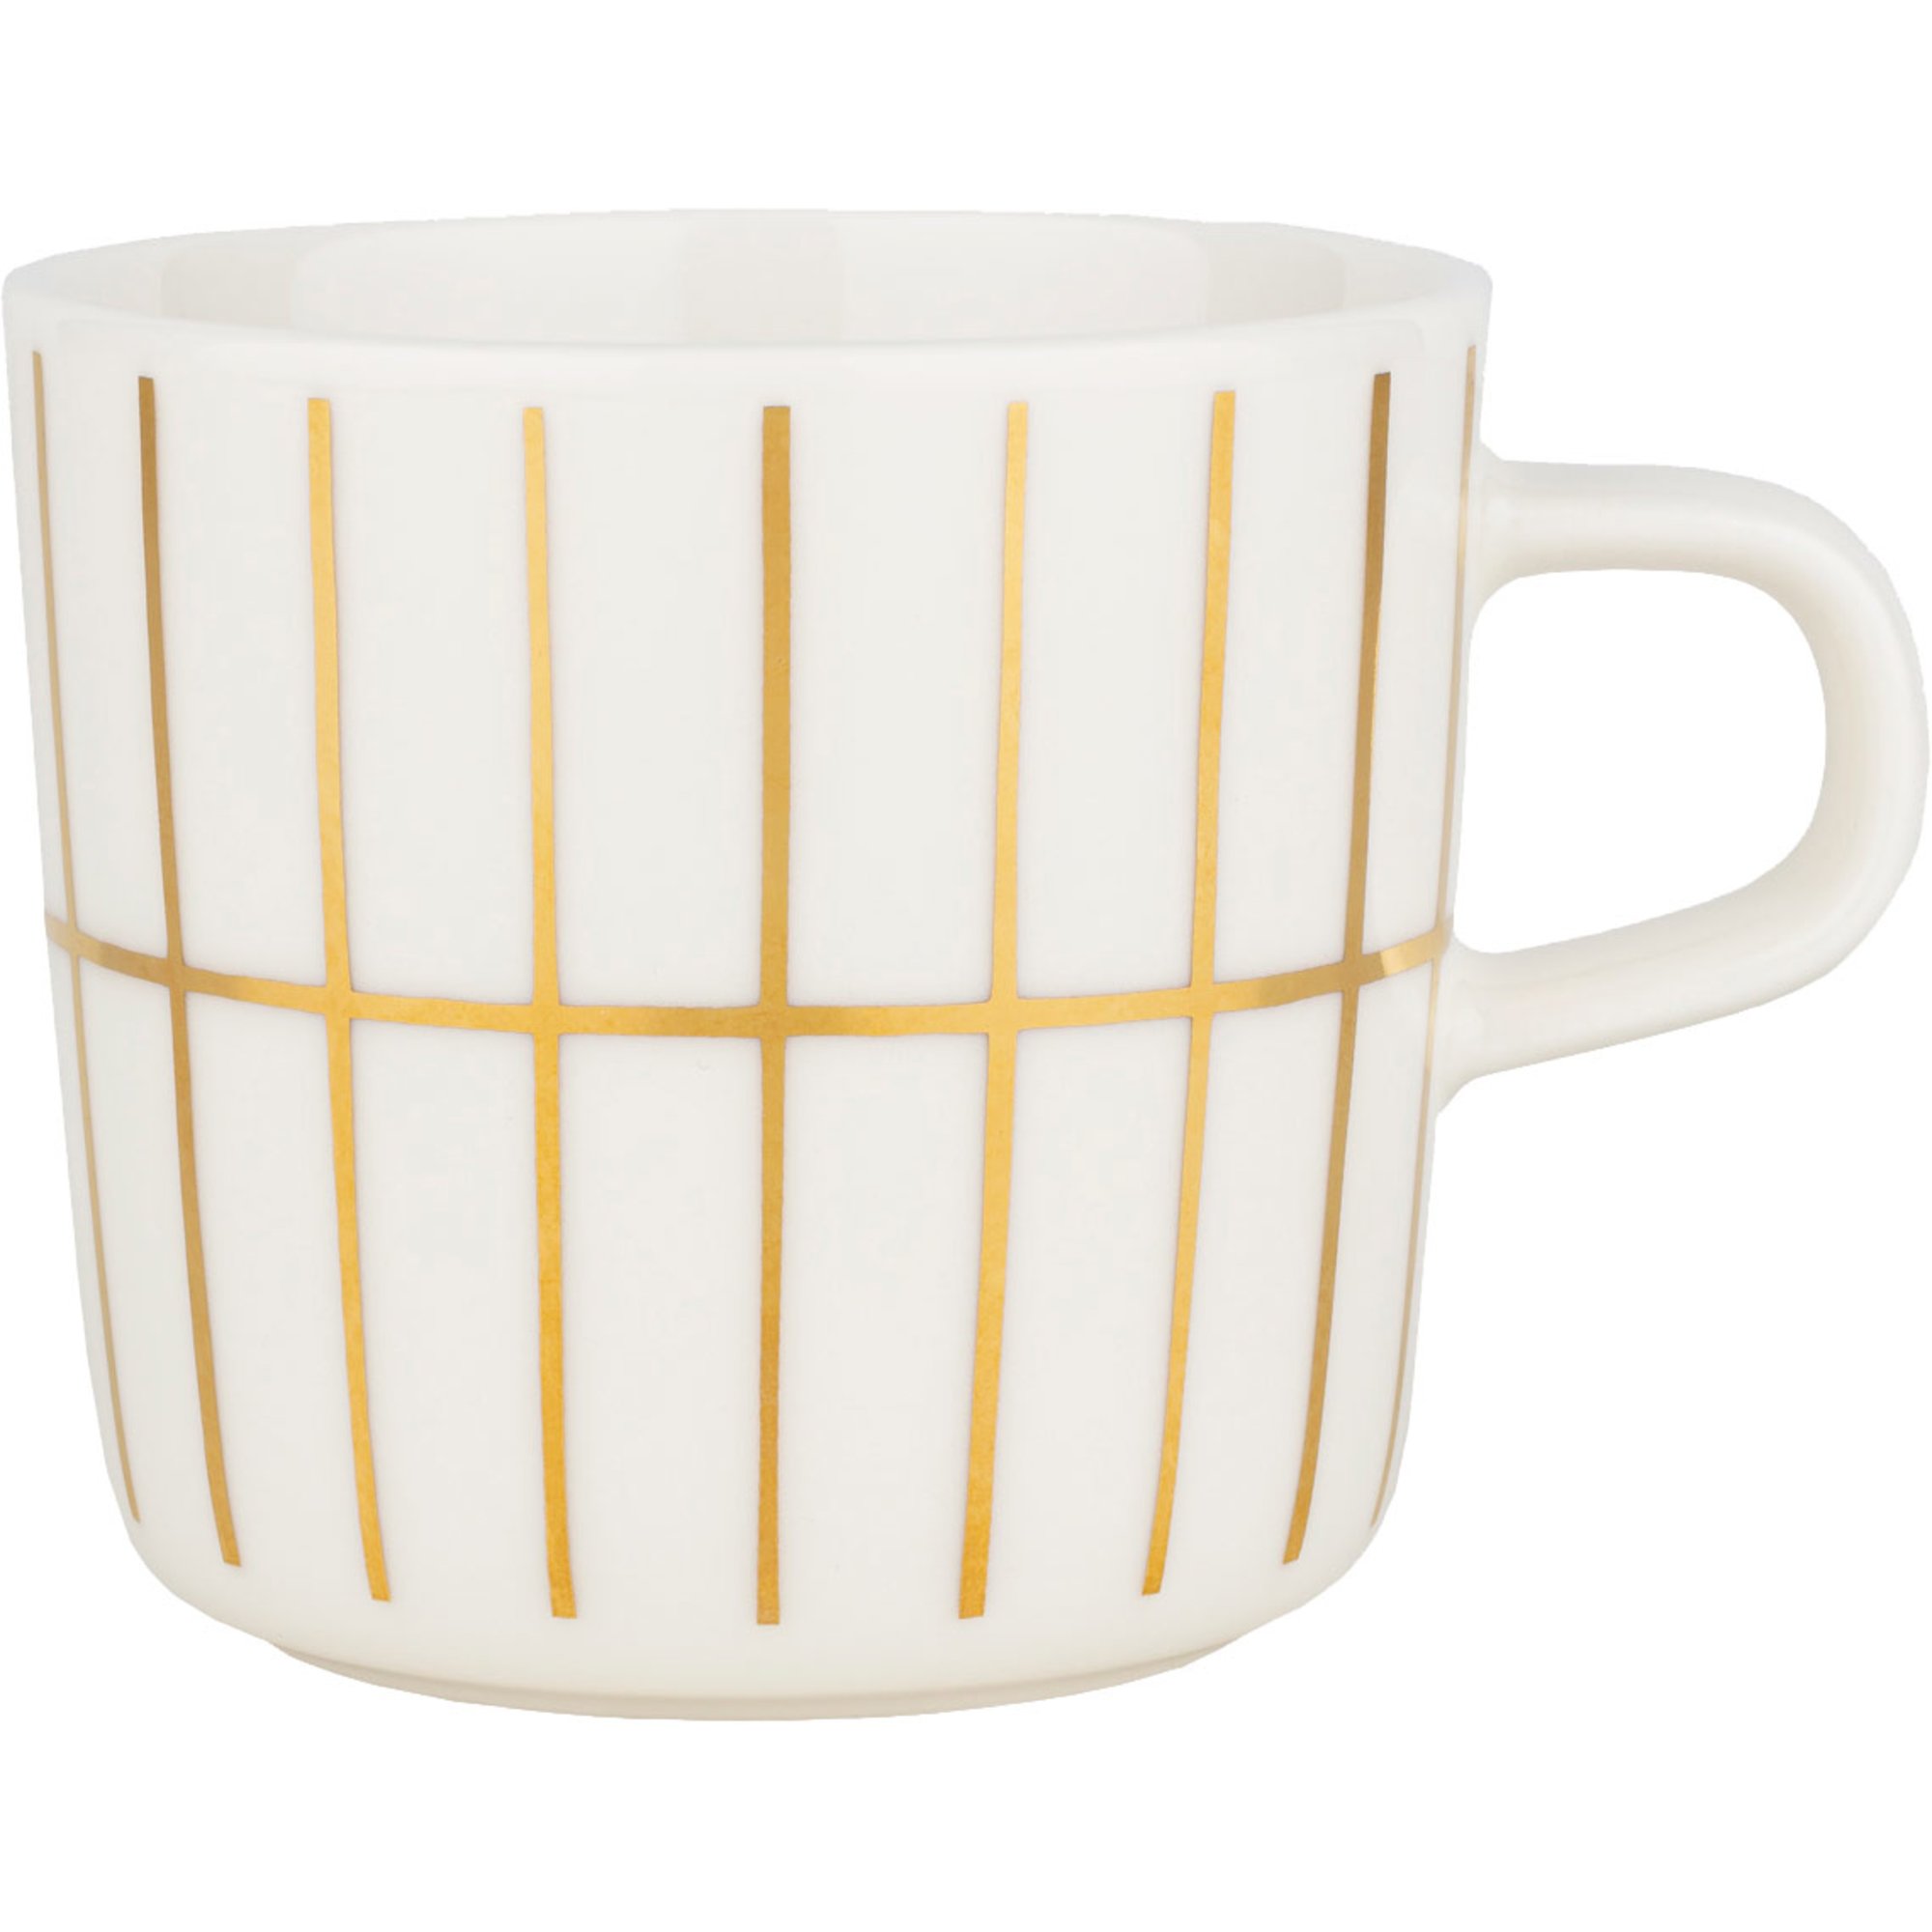 Tiiliskivi kaffekopp, 2 dl, från Marimekko